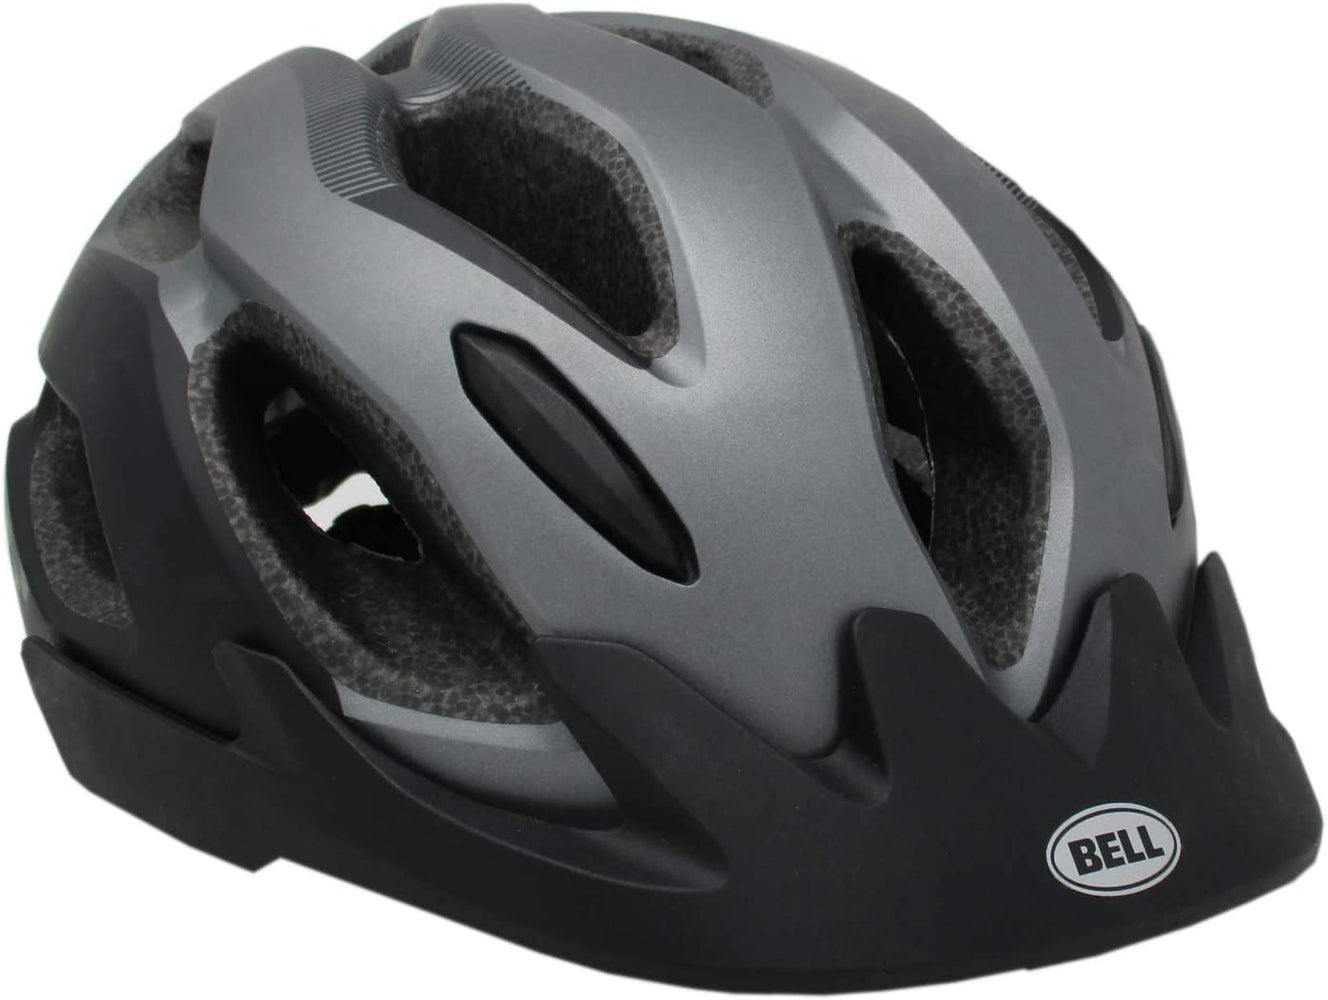 Bell Track Youth Adult Bike Helmet